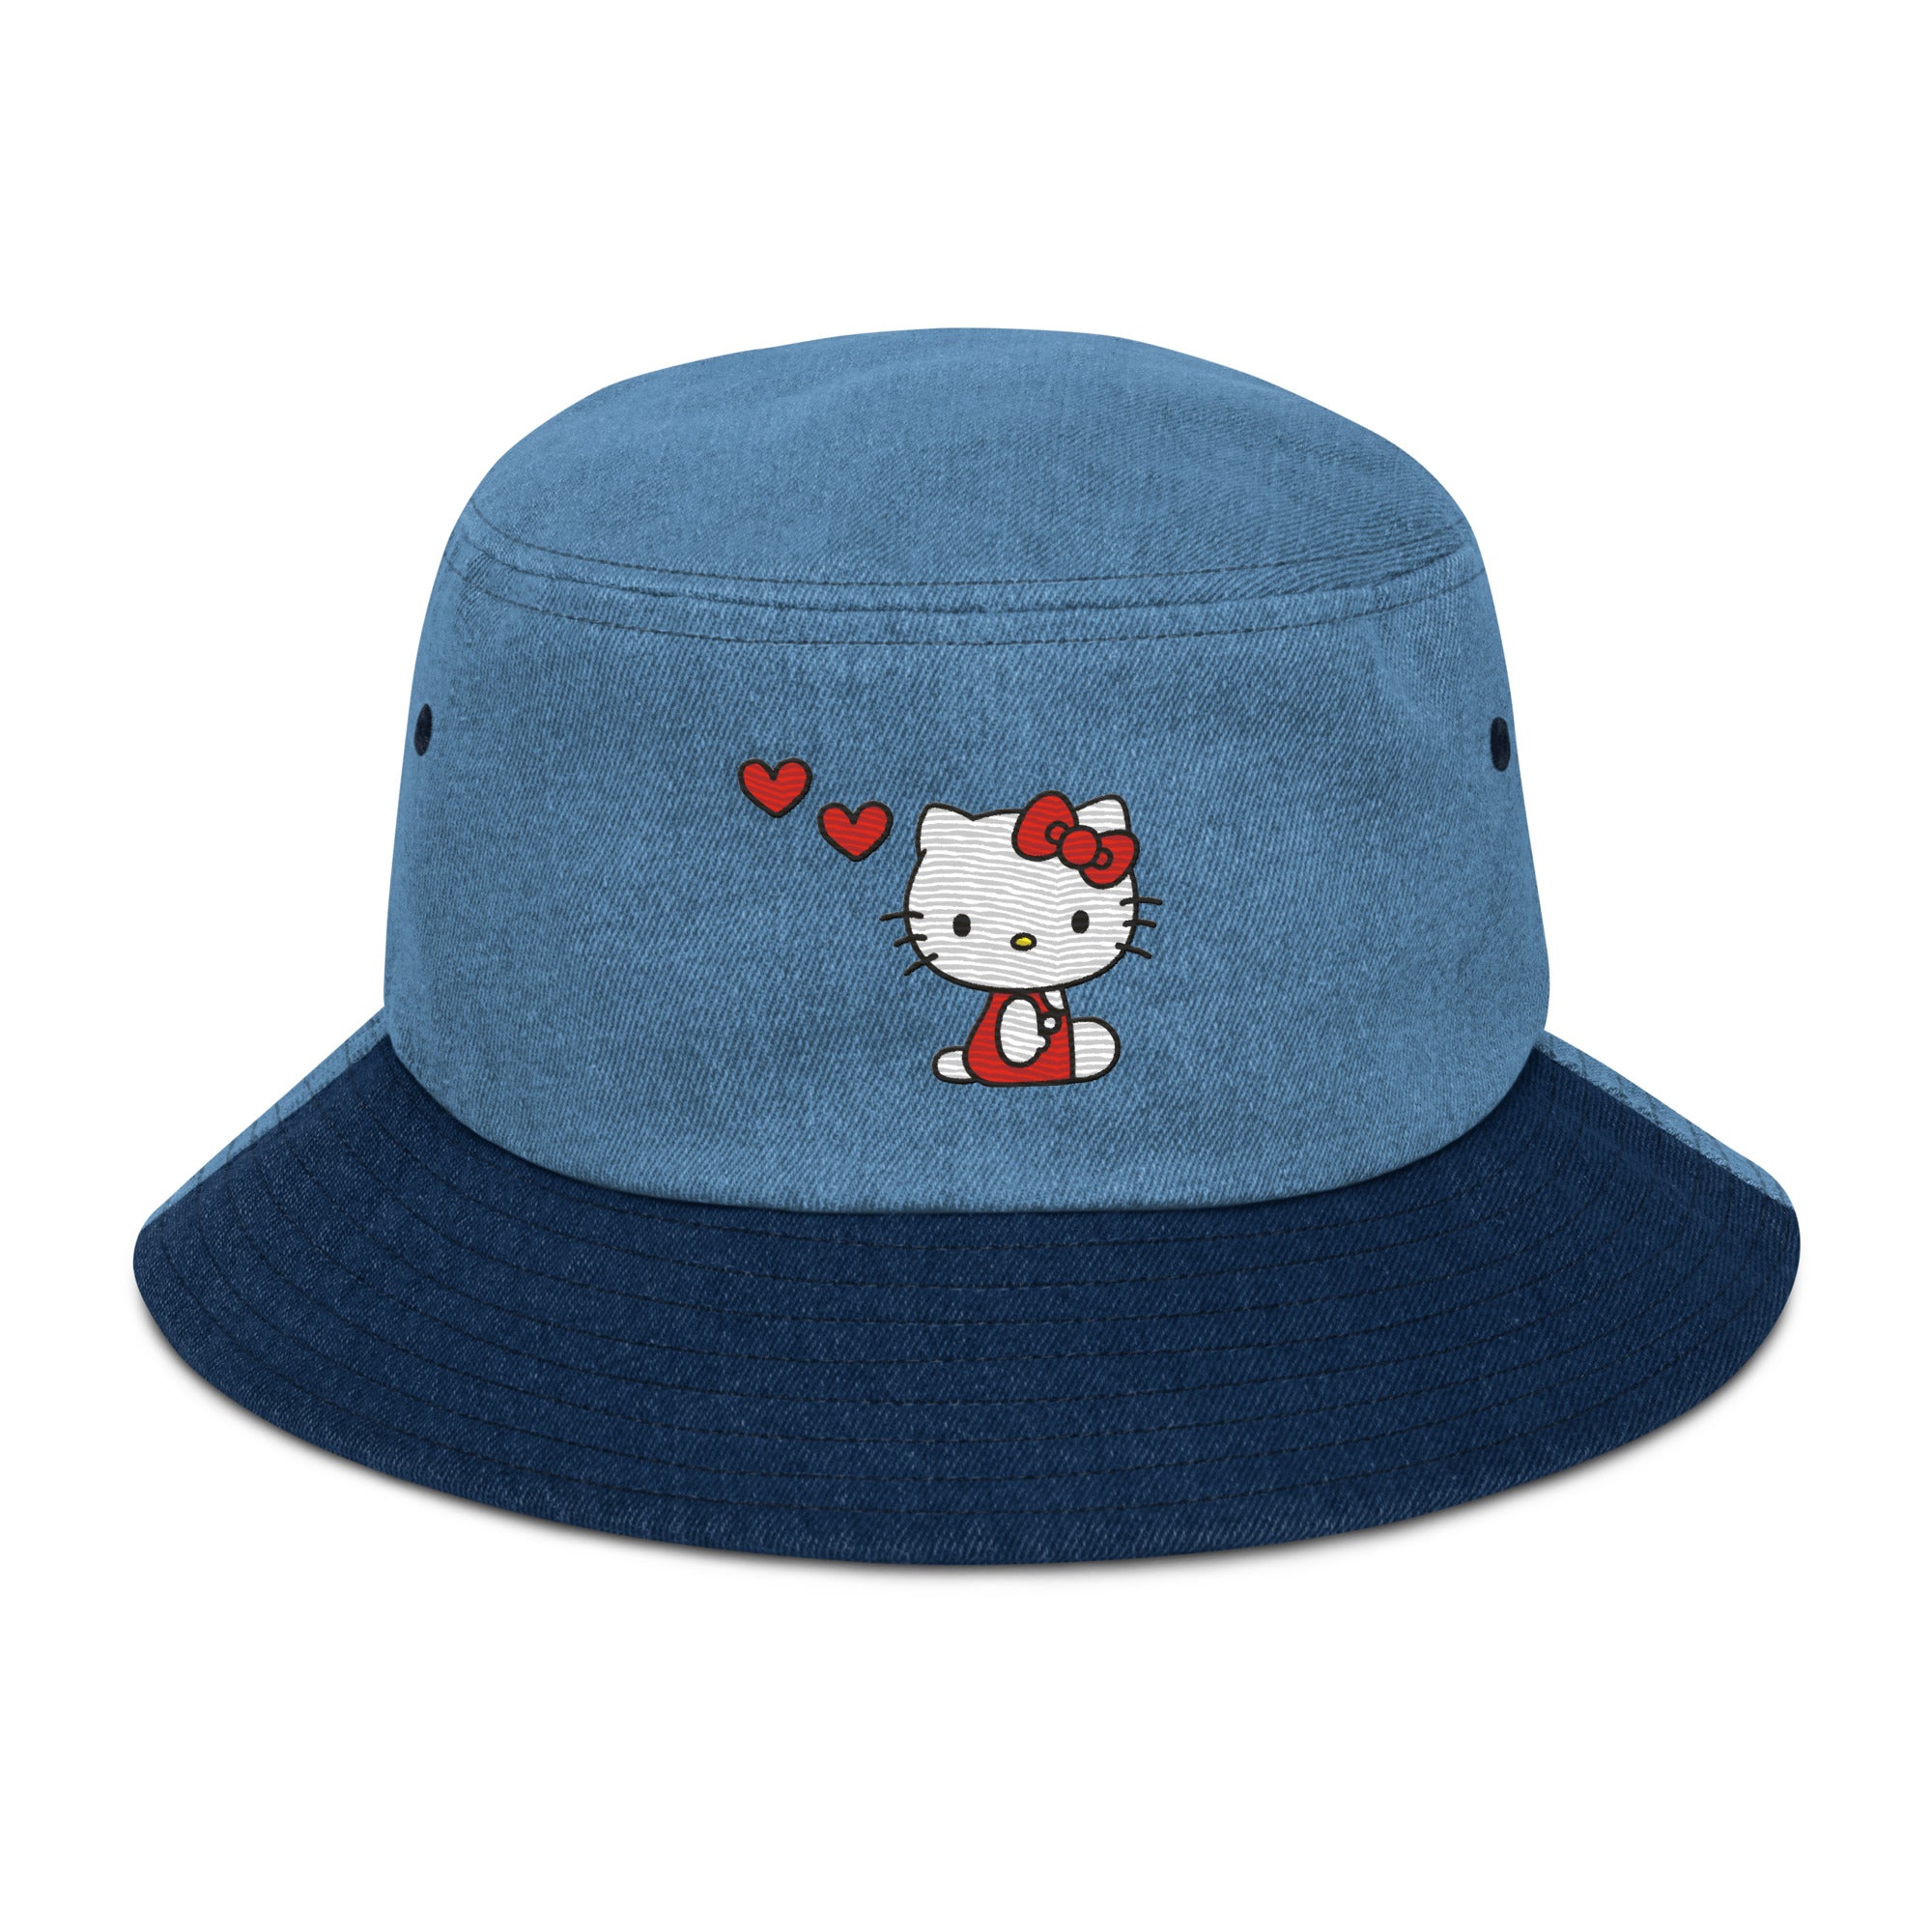 Hello Kitty Embroidered Denim Bucket Hat Accessory Printful Classic / Light Denim  